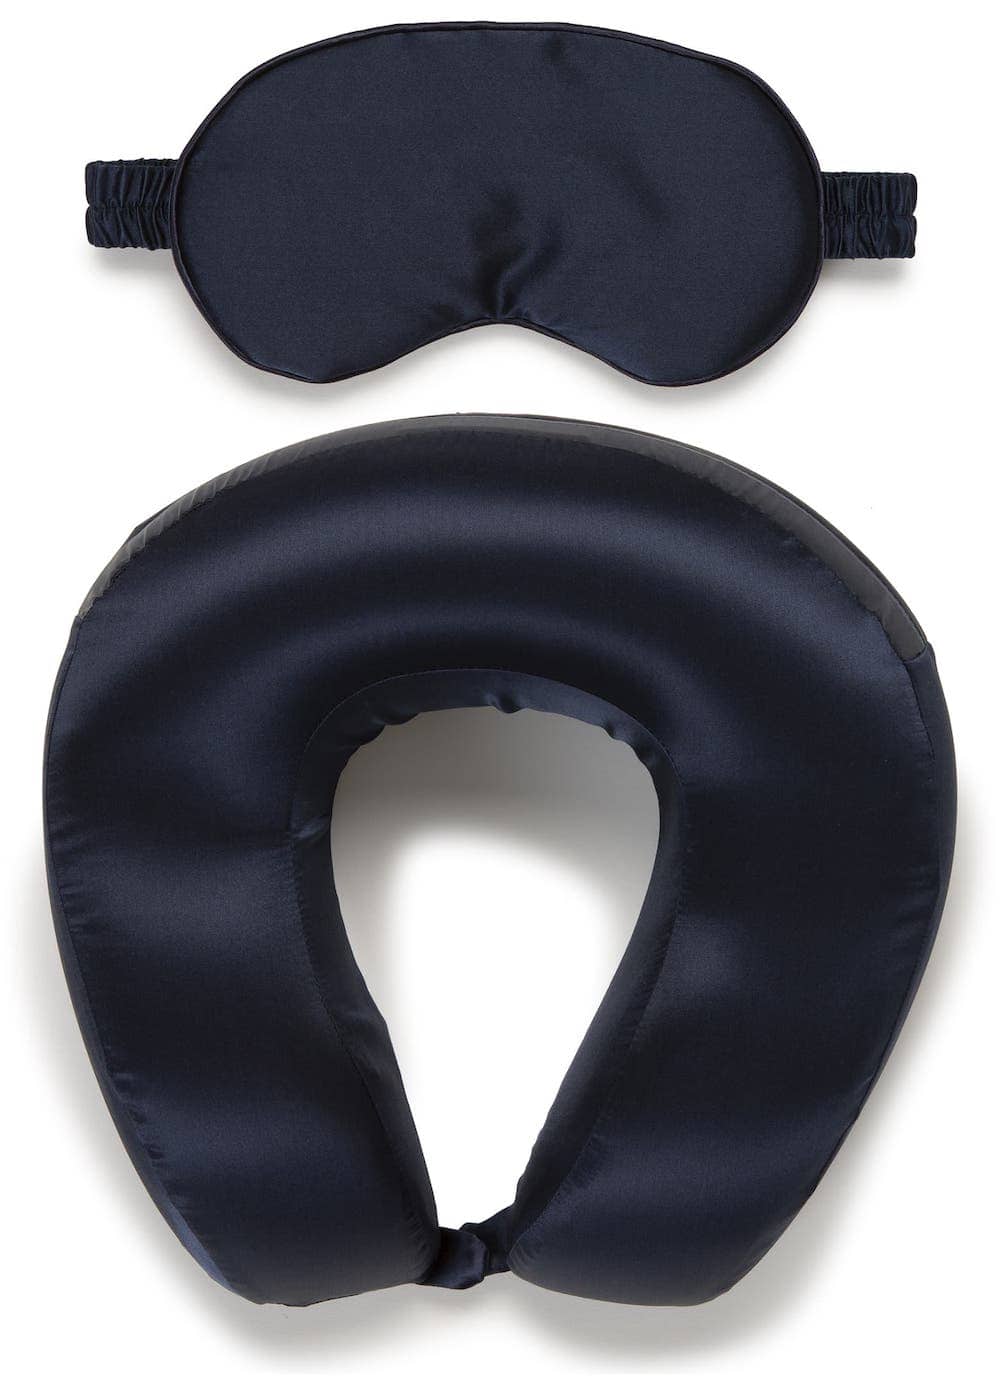 Under $100 white elephant gift ideas. Calpak Silk Travel Neck Pillow & Eye Mask Set